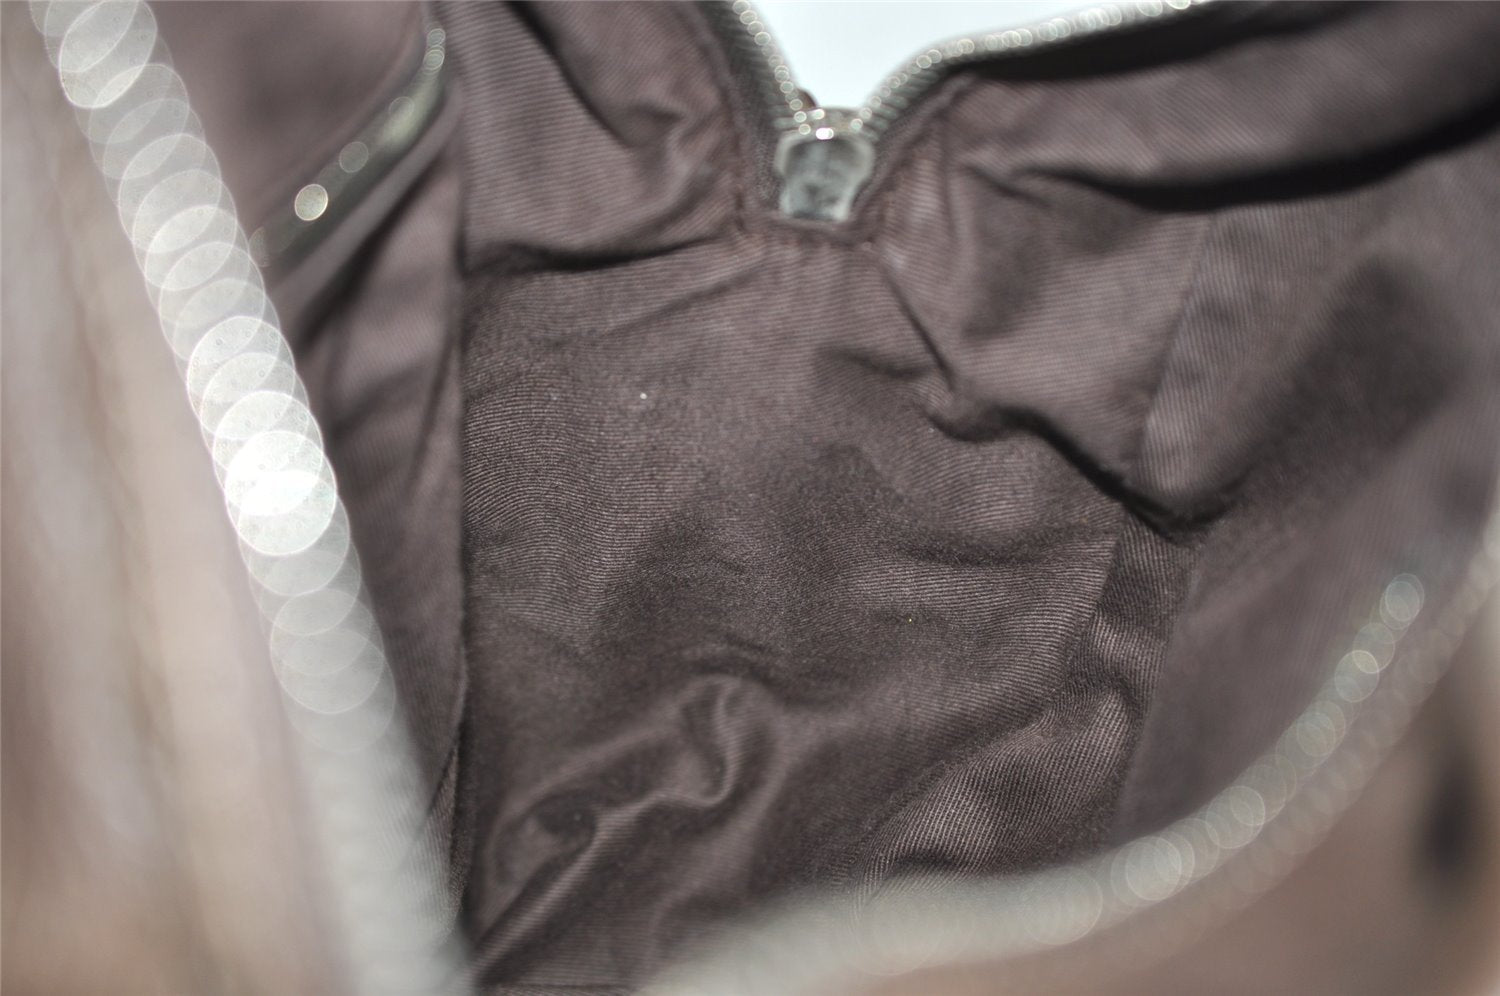 Authentic Chloe Vintage Paddington Leather Shoulder Hand Bag Brown 4208J